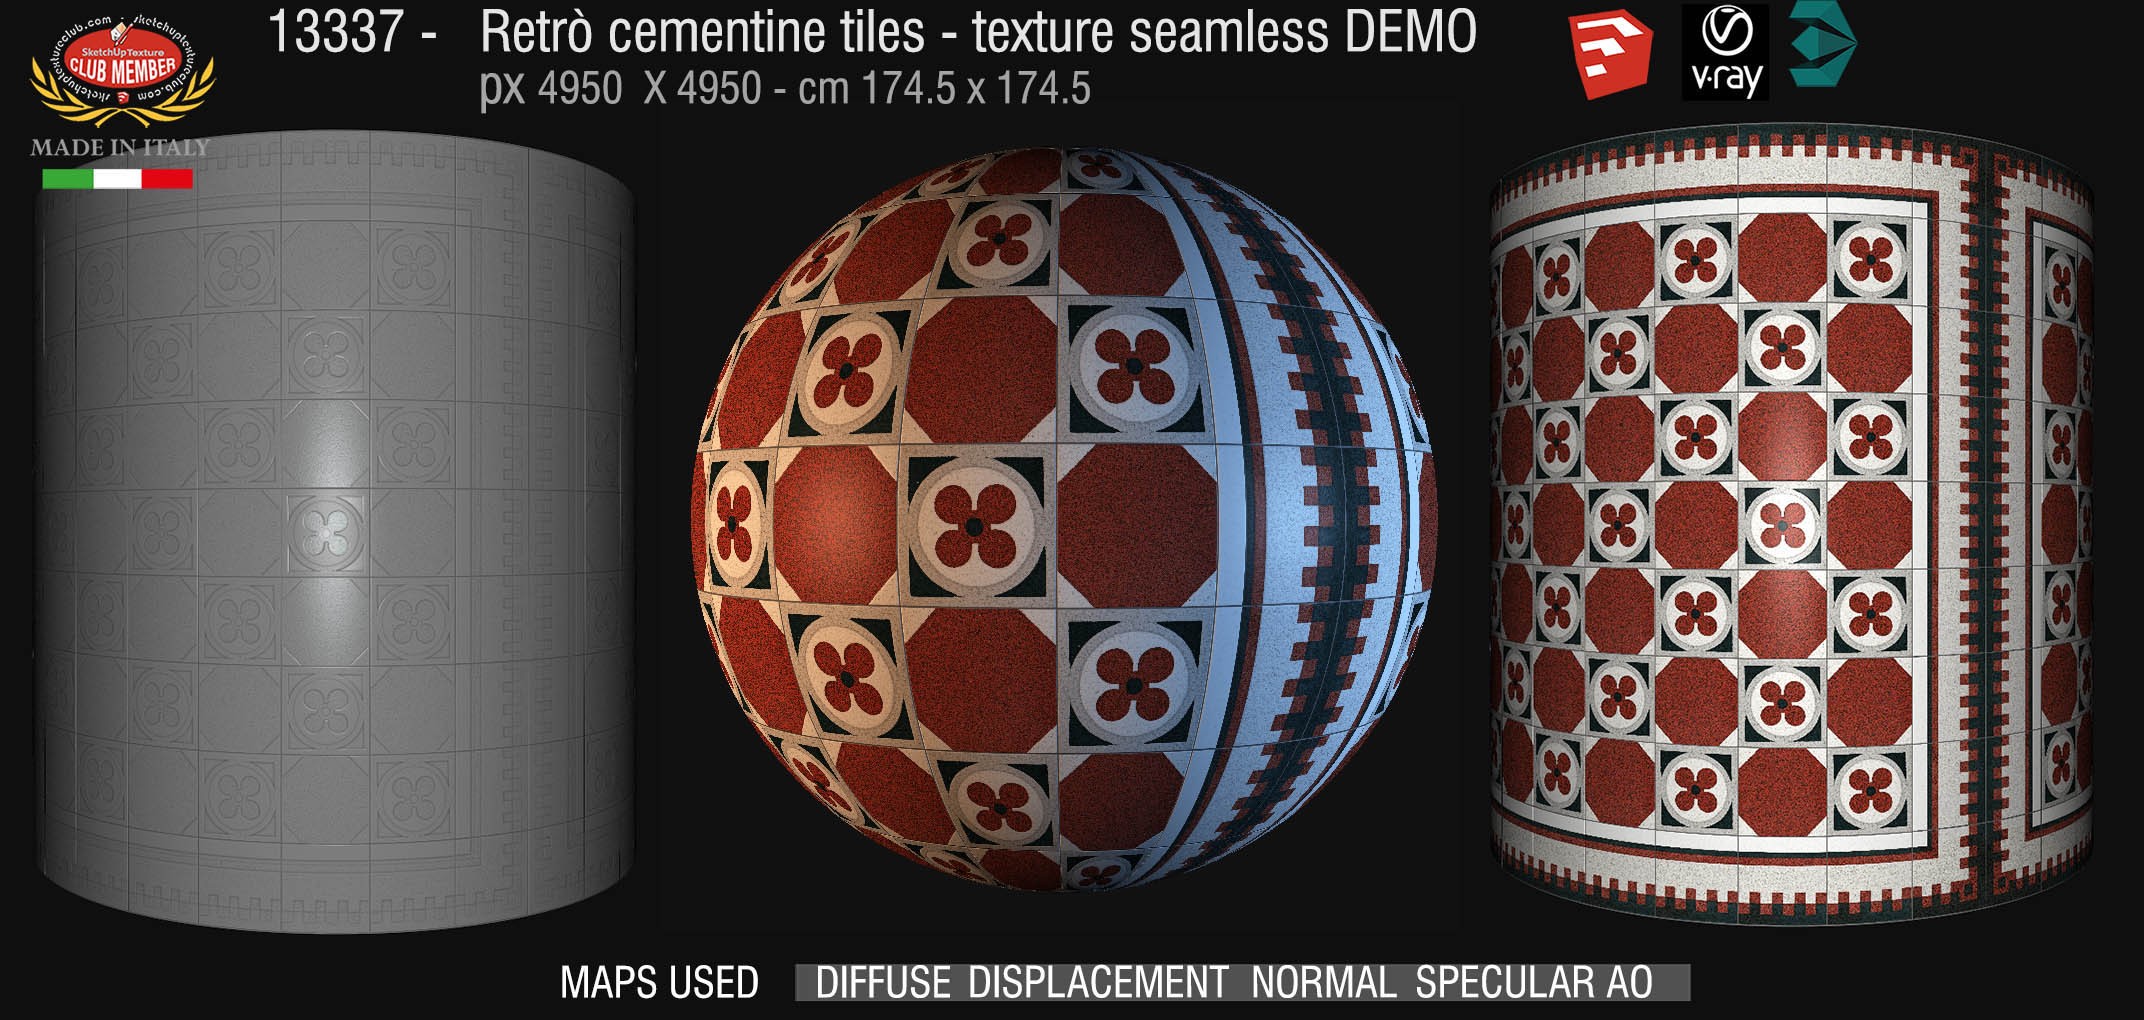 13337 retrò cementine tiles - texture seamless + maps DEMO